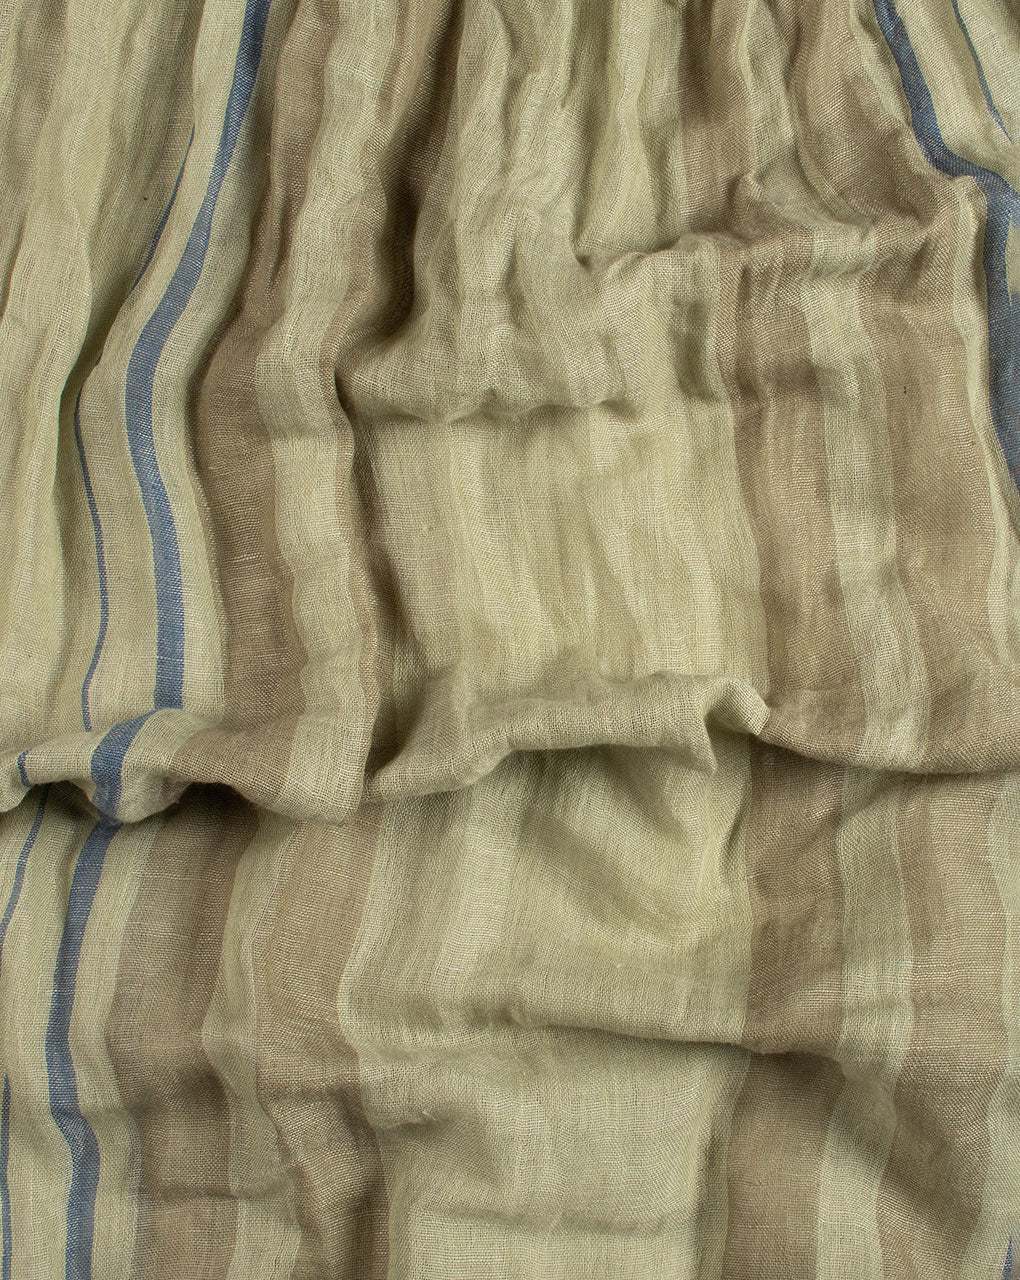 Green Stripes Woven Bhagalpuri Cotton Stole - Fabriclore.com